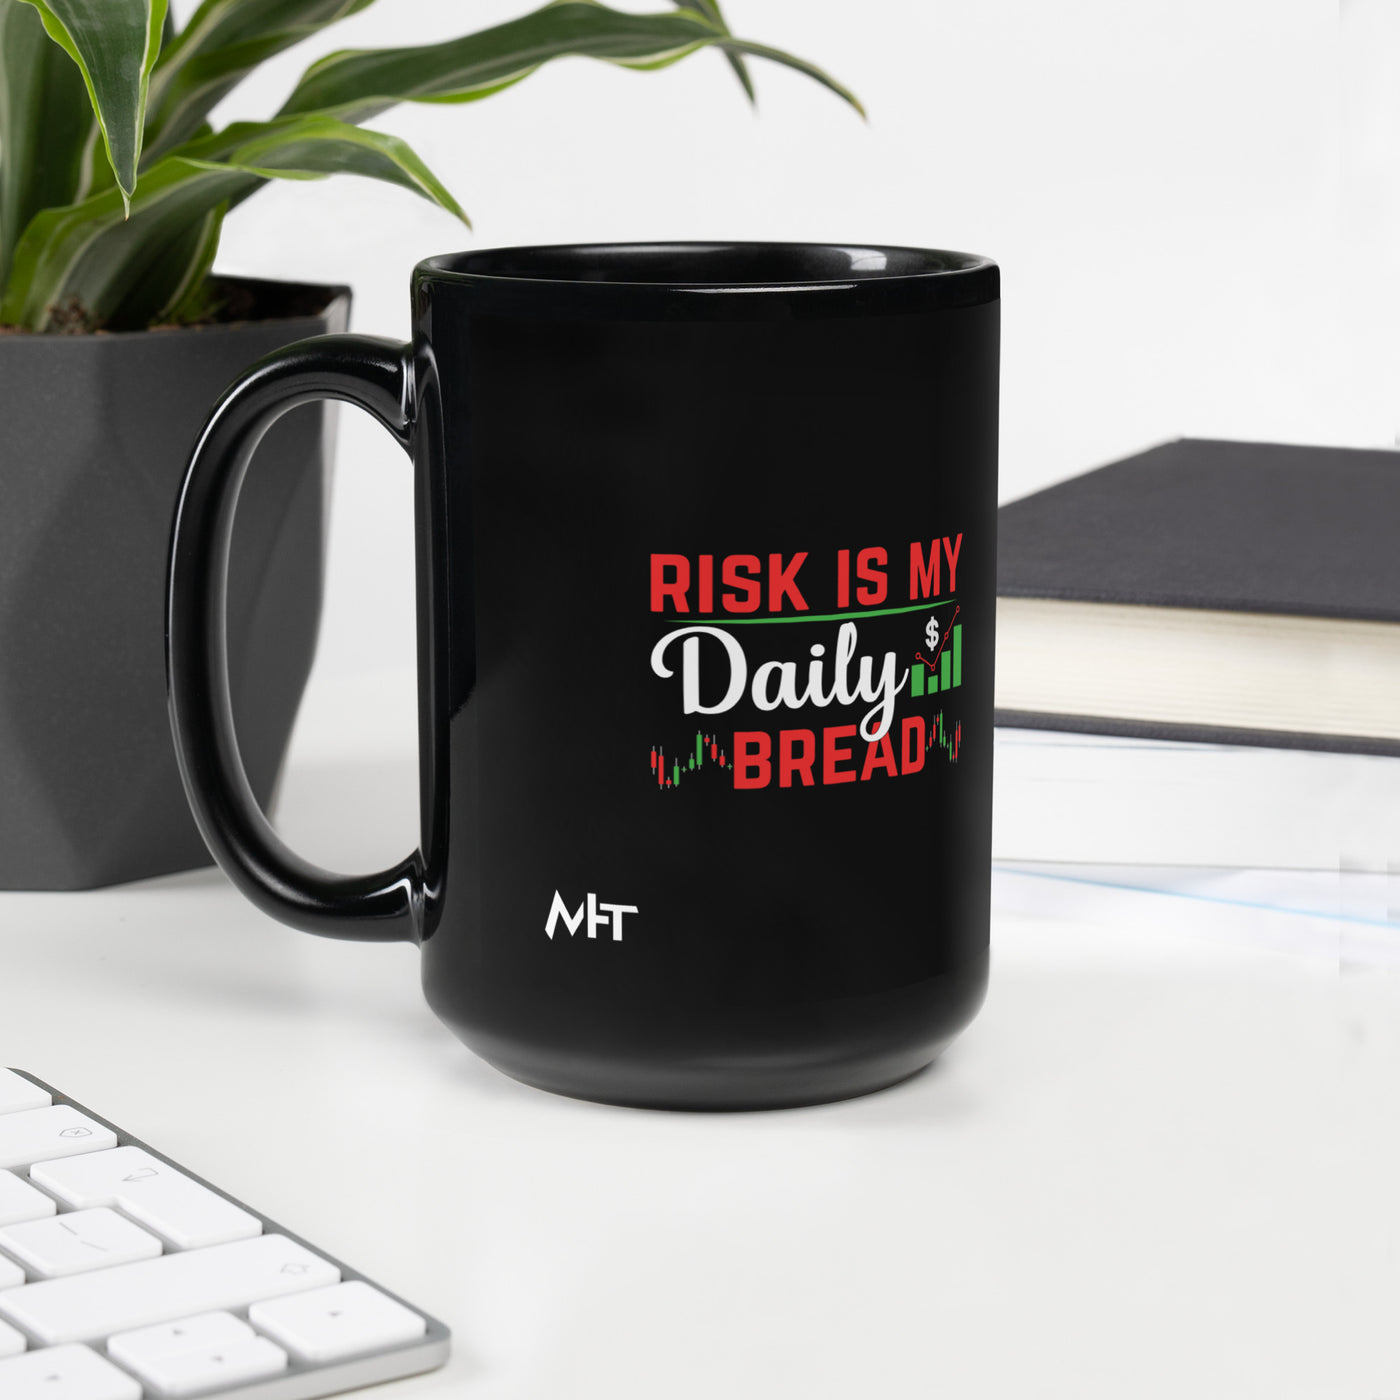 Risk is my Daily Bread - Black Glossy Mug